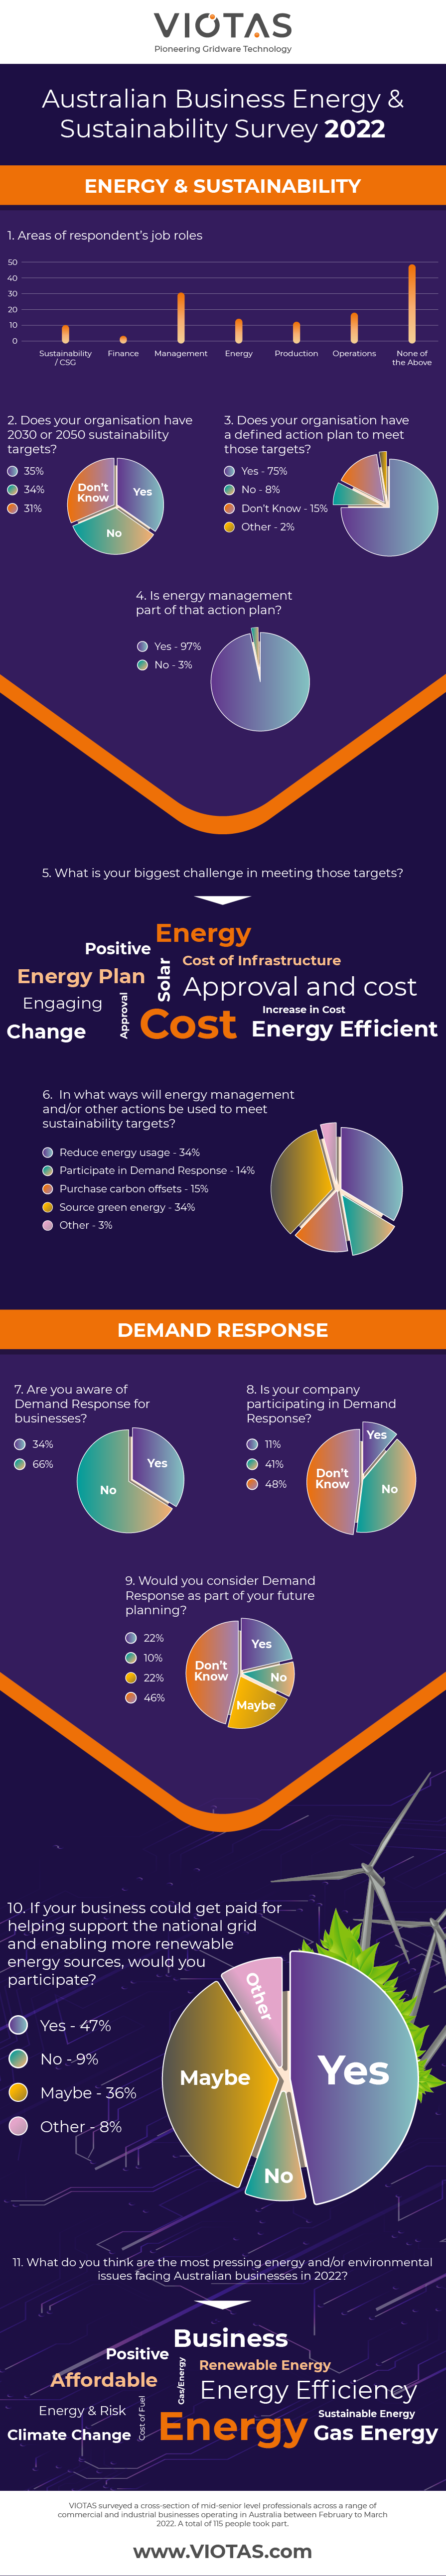 VIOTAS Australian Energy Sustainability Demand Response Survey 2022 Mobile